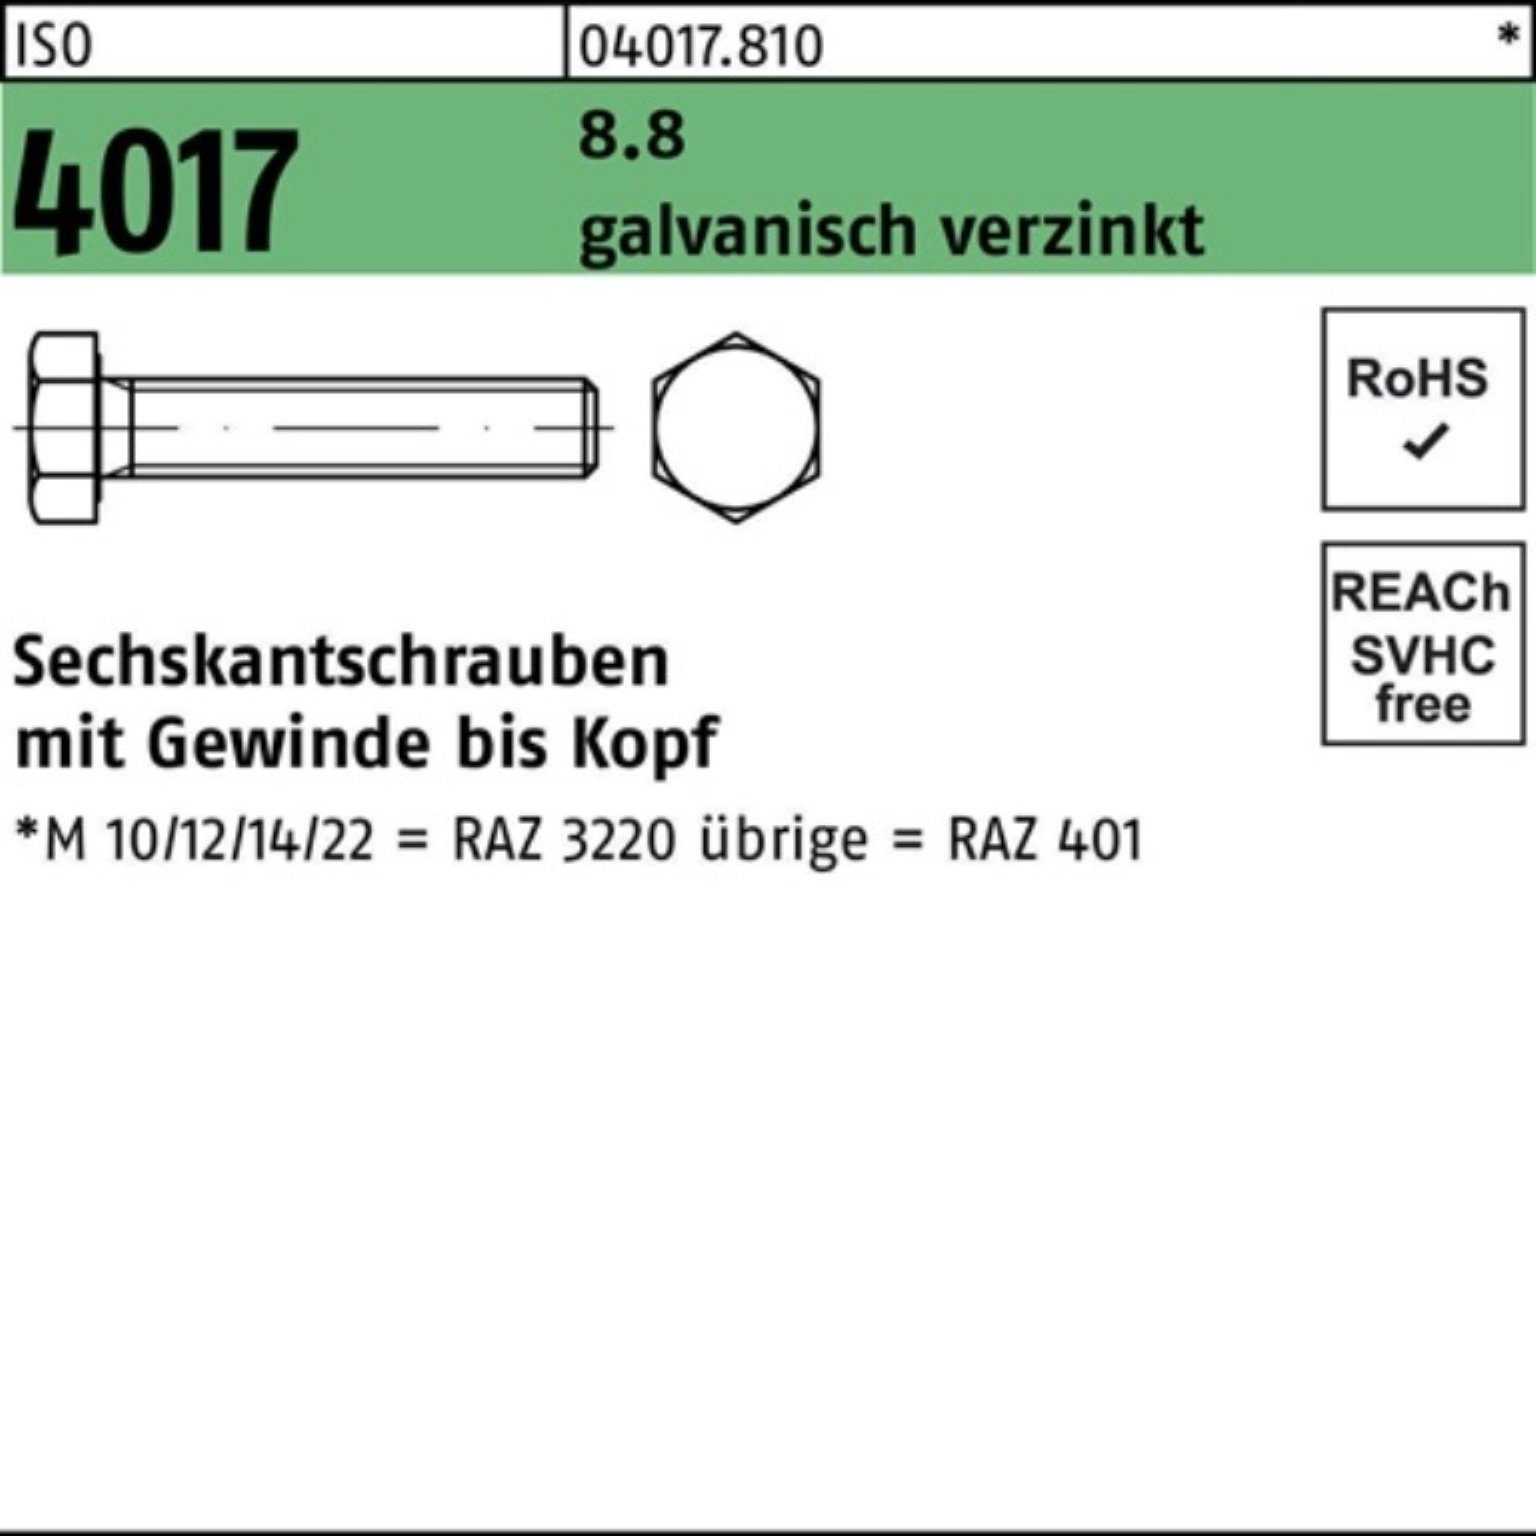 Sechskantschraube Bufab VG 4017 galv.verz. M30x Pack St Sechskantschraube 1 100er 8.8 ISO 220